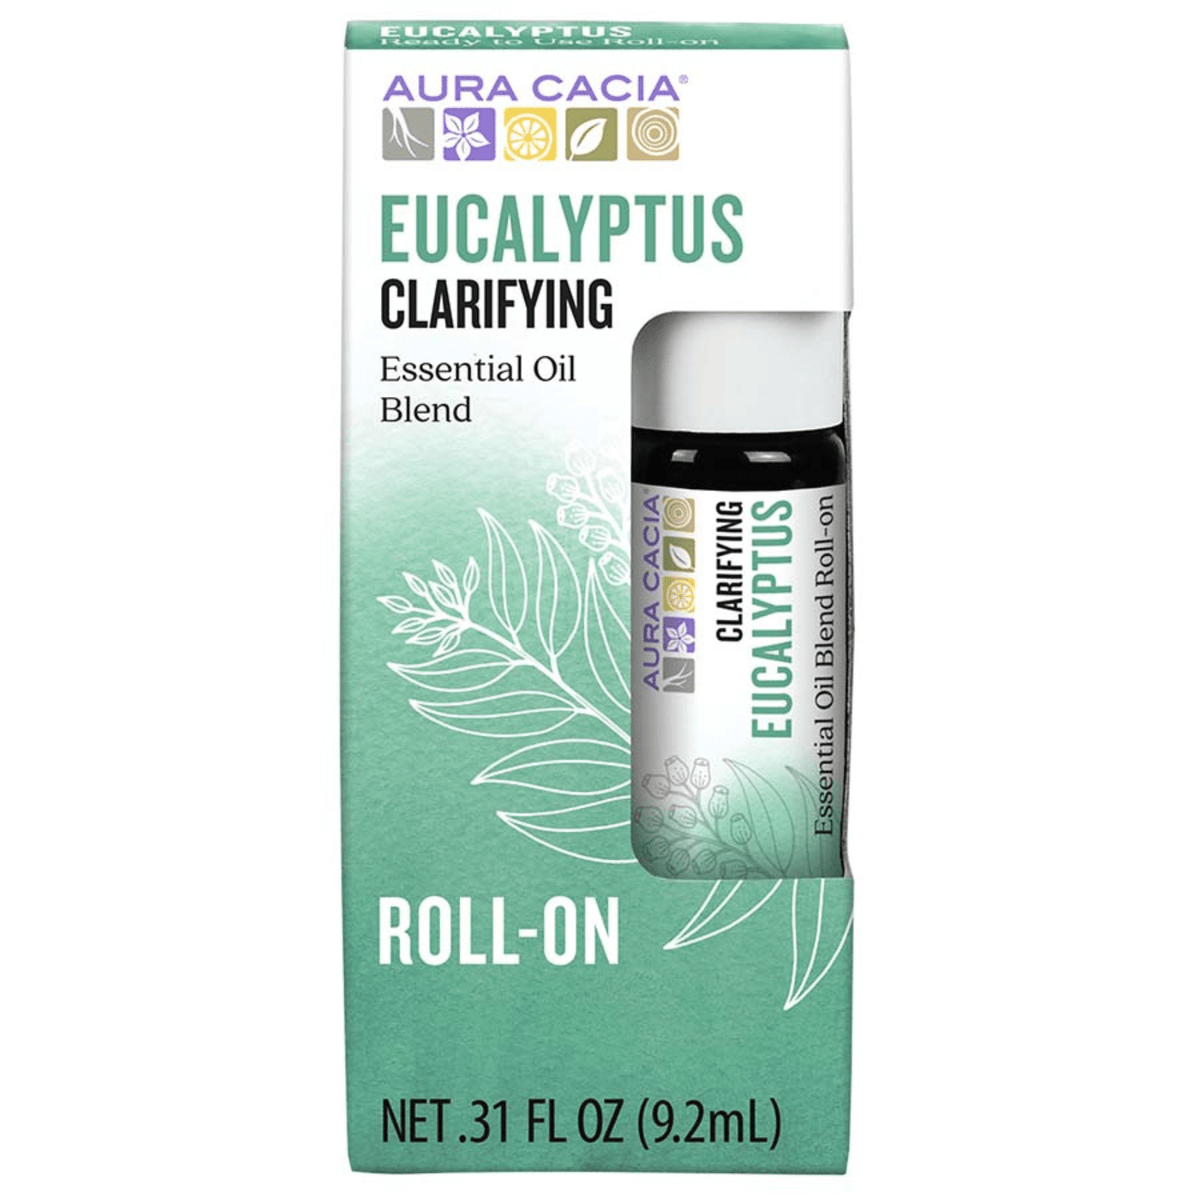 Primary Image of Eucalyptus Clarifying Roll On